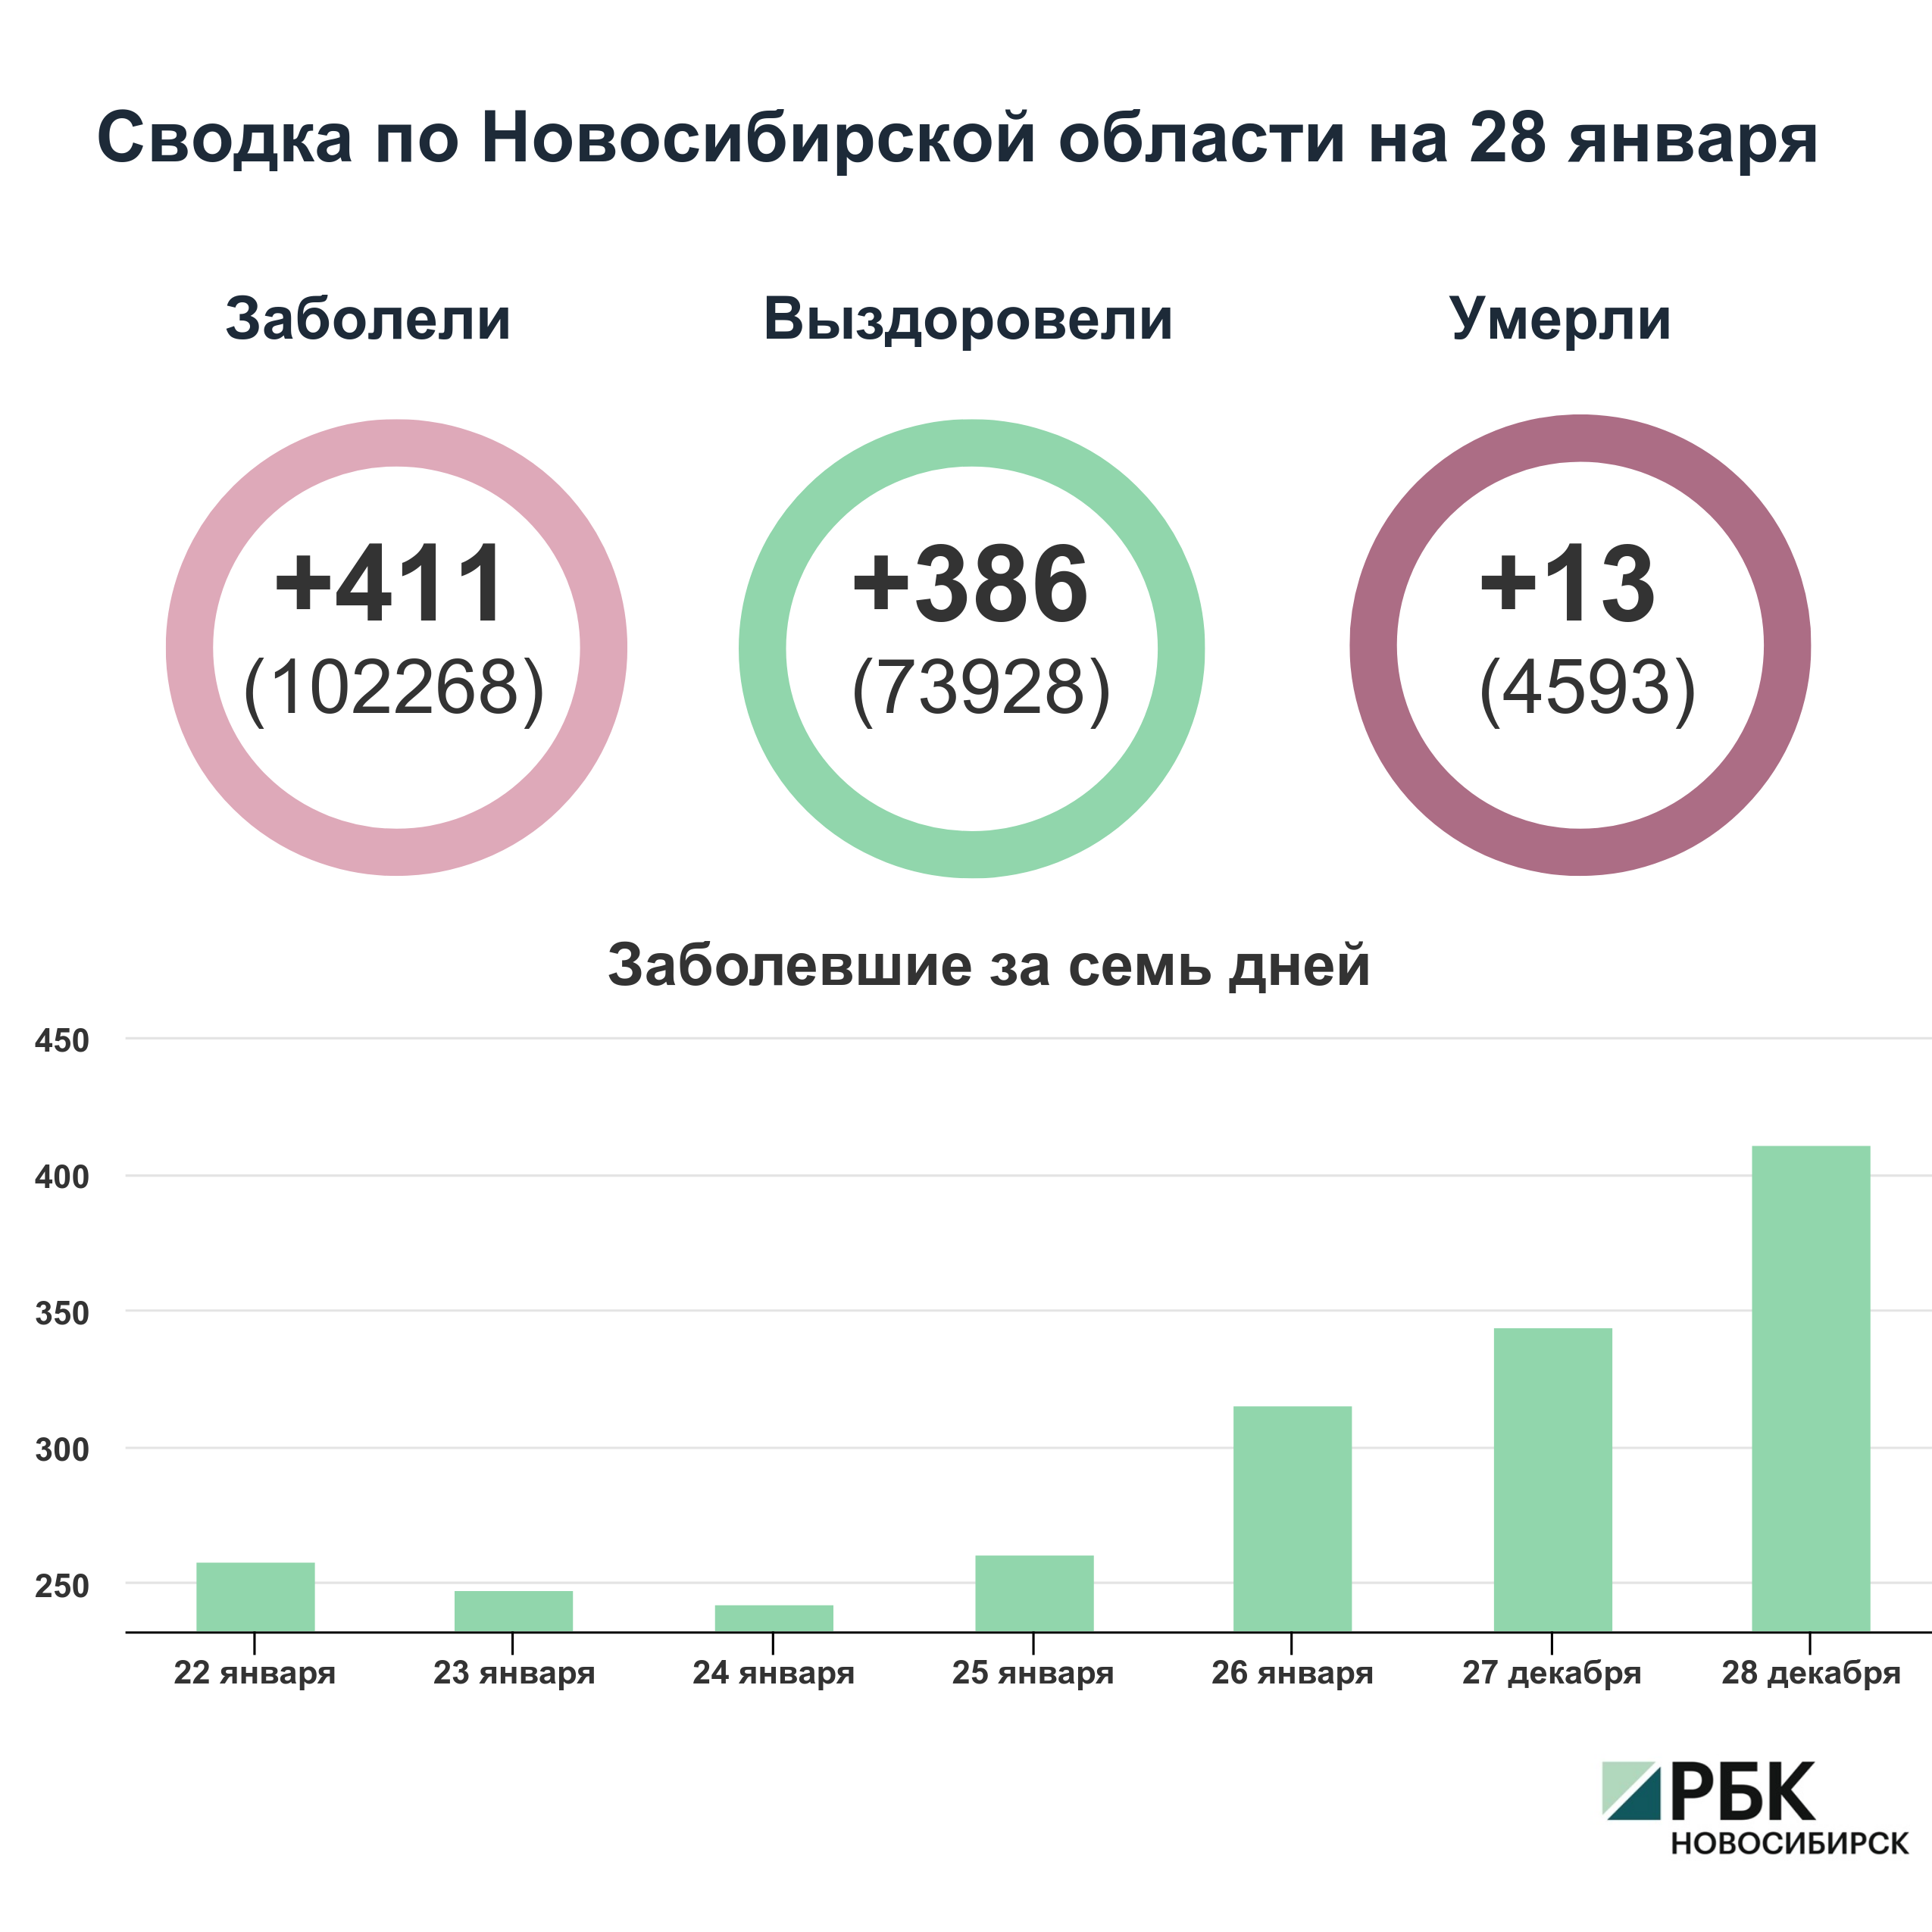 Коронавирус в Новосибирске: сводка на 28 января